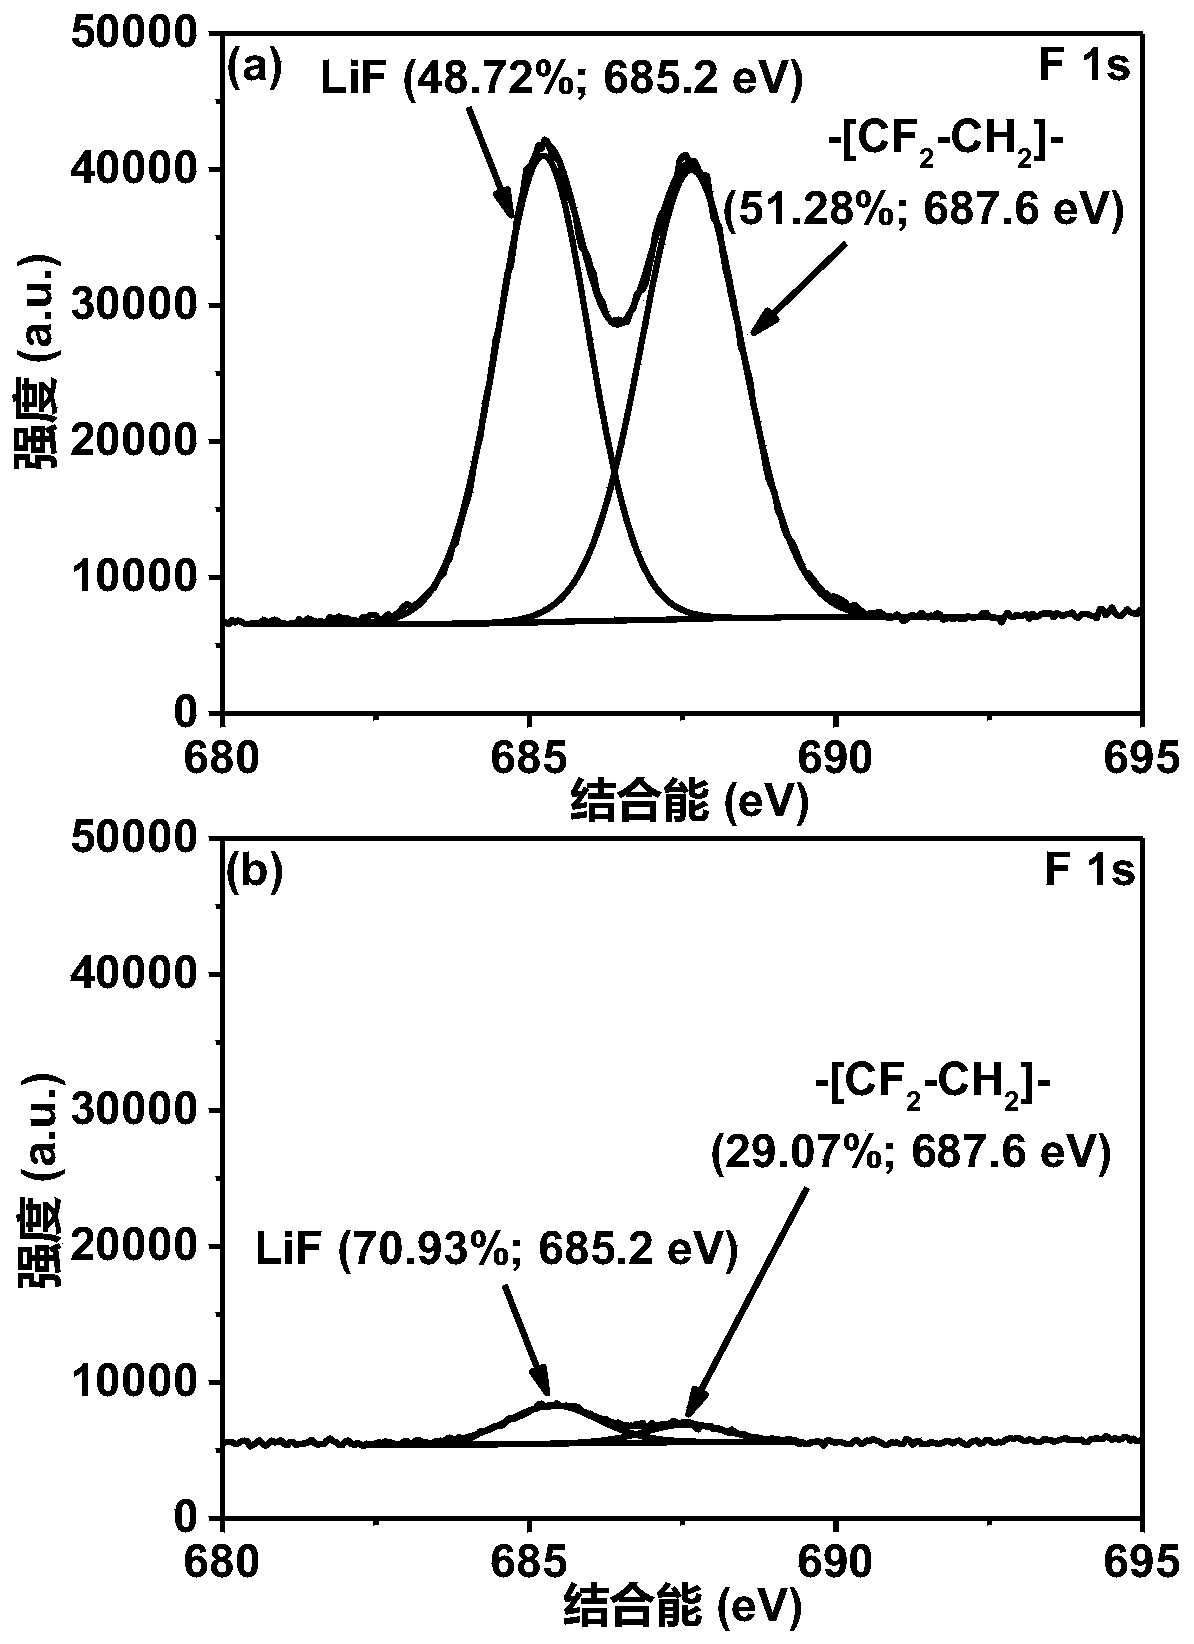 In-situ fluoride adsorption method from waste lithium battery via high-ferro slag